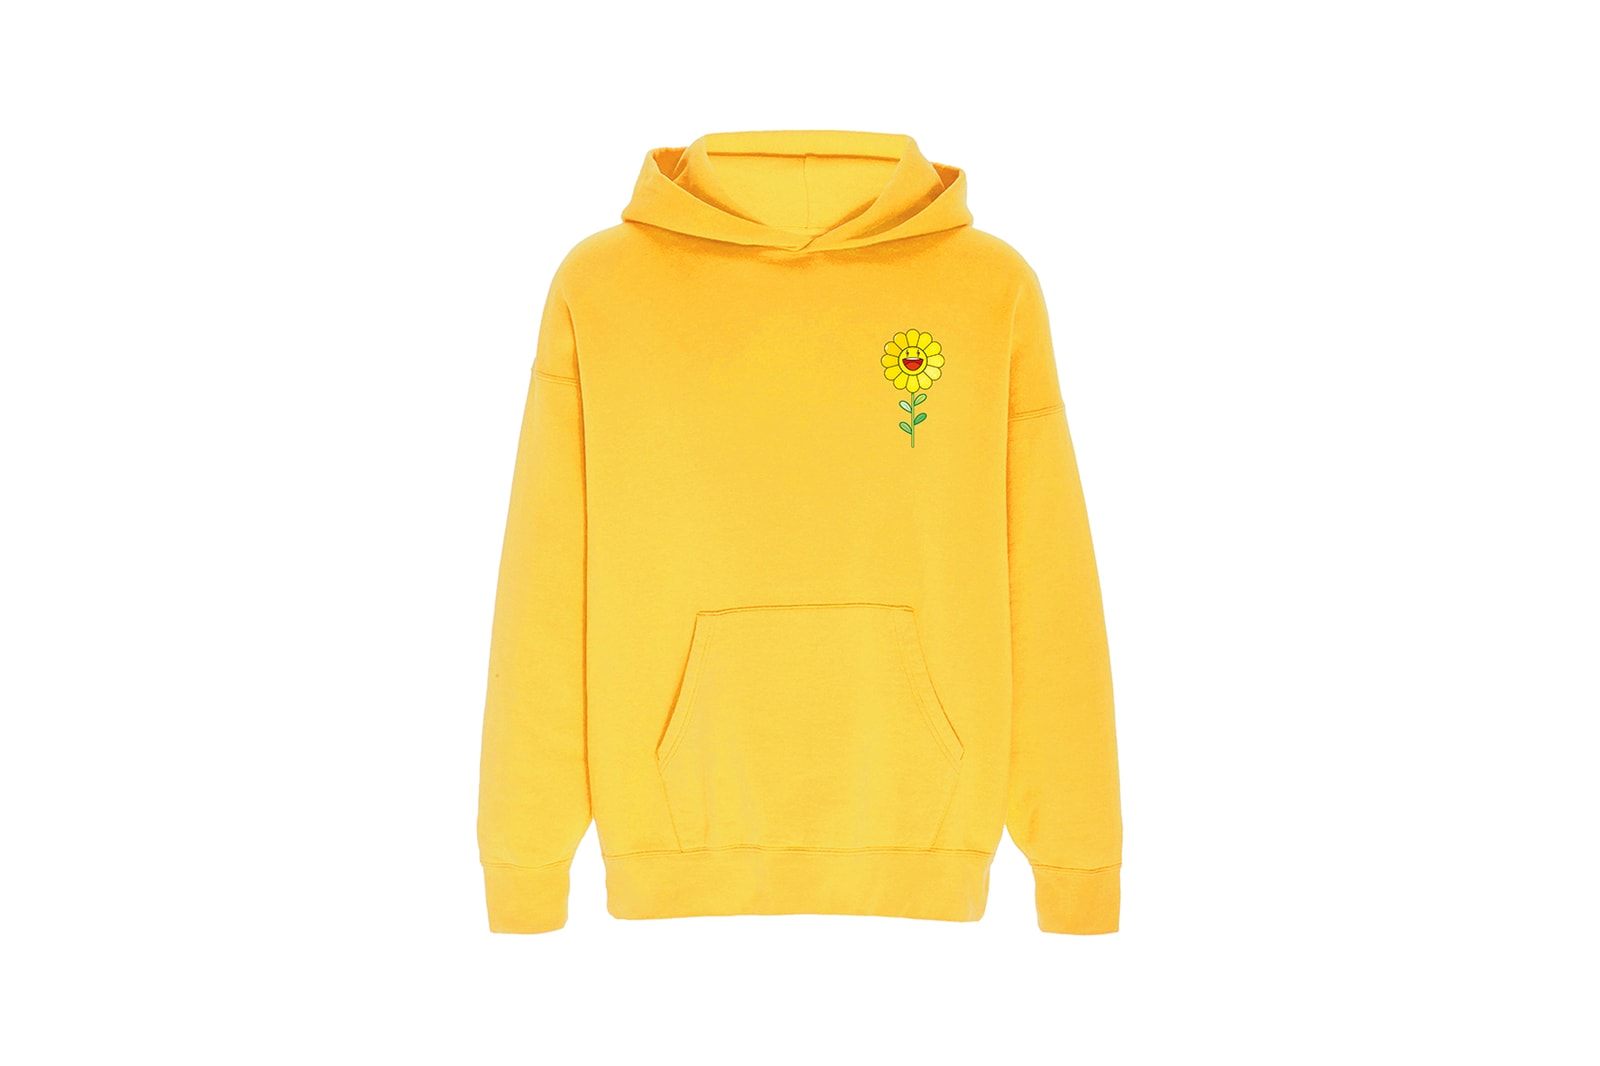 takashi murakami j balvin collaboration hoodies t shirts yellow black